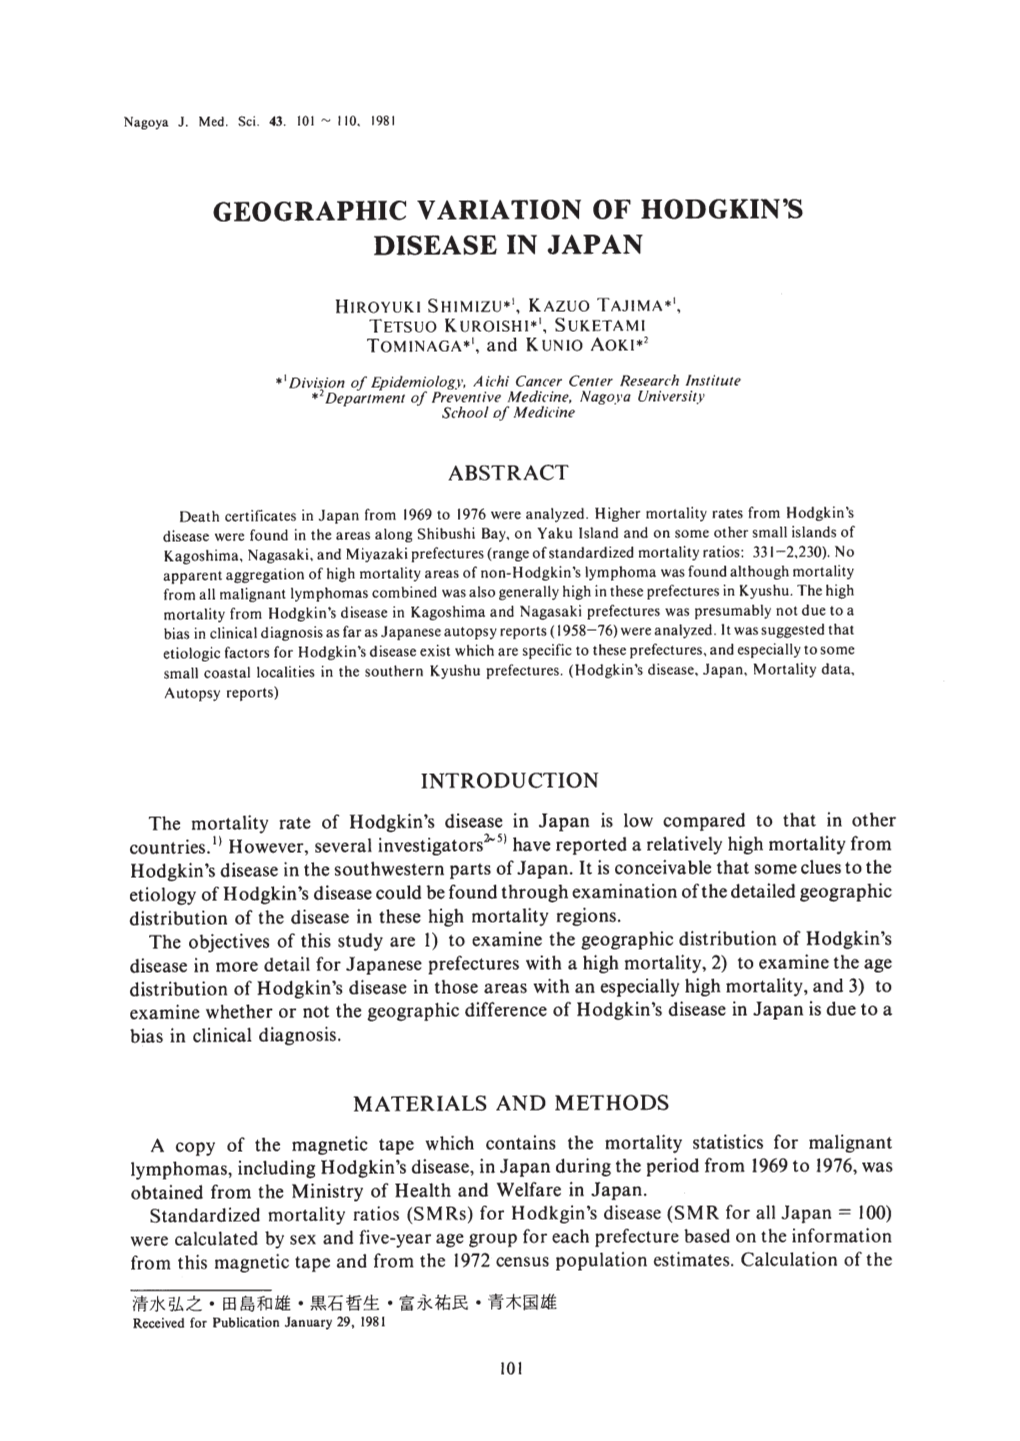 Geographic Variation of Hodgkin's Disease in Japan